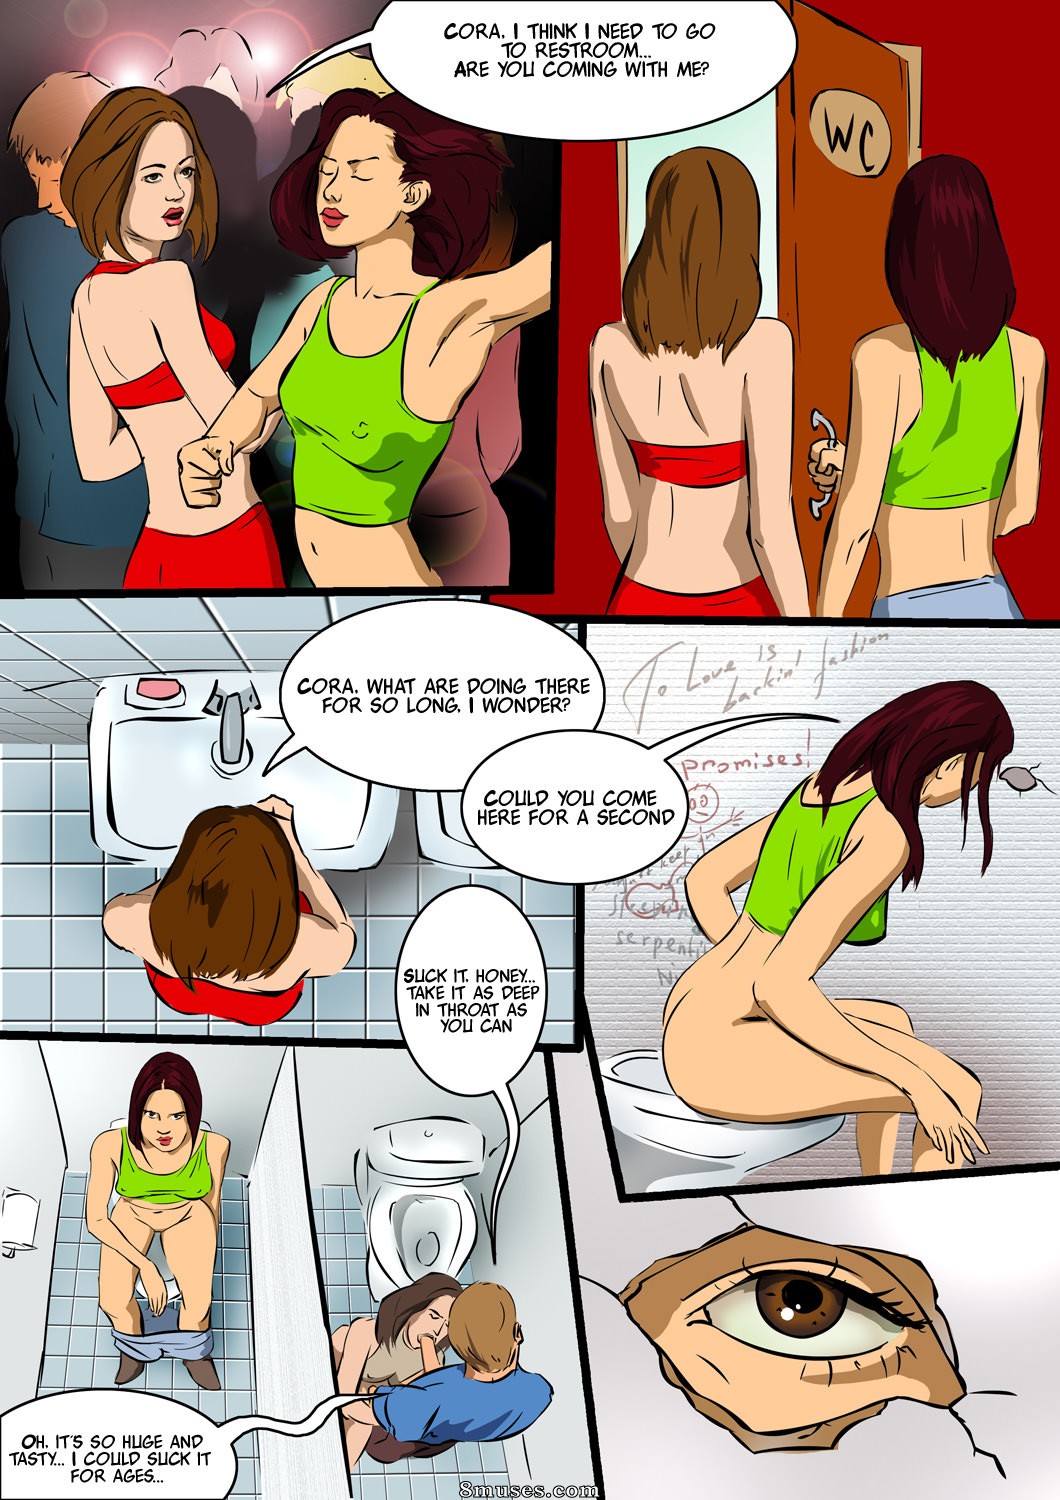 Night Club Toilet Issue 1 - 8muses Comics - Sex Comics and Porn Cartoons